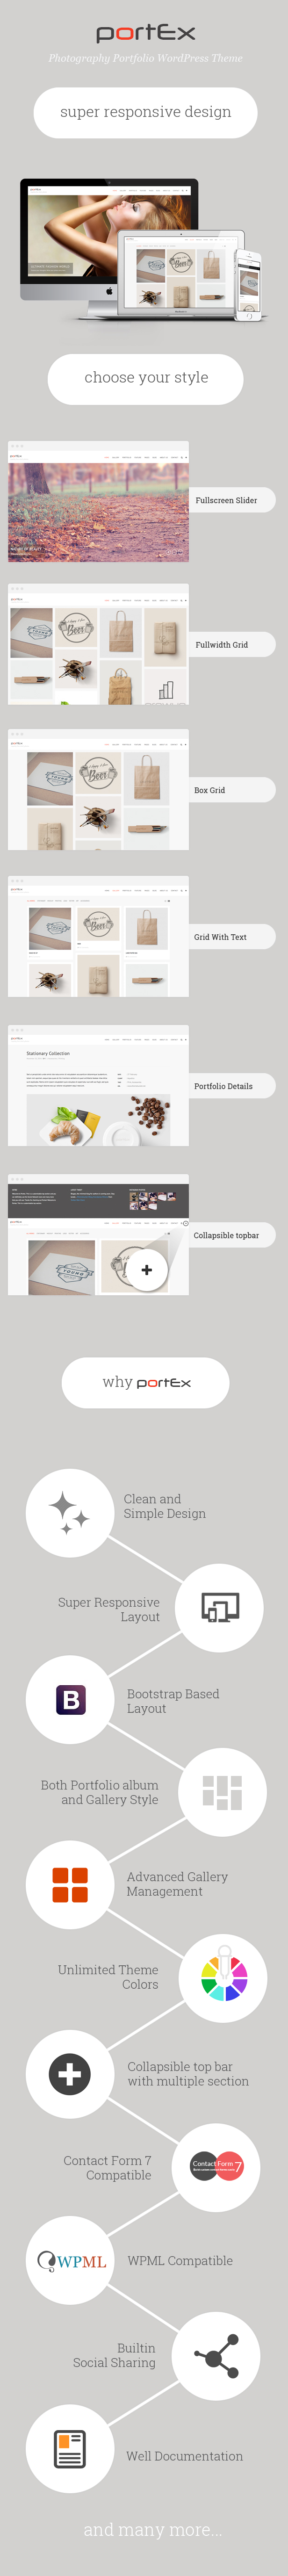 Portex - Fotografie Portfolio WordPress Vorlage - 1